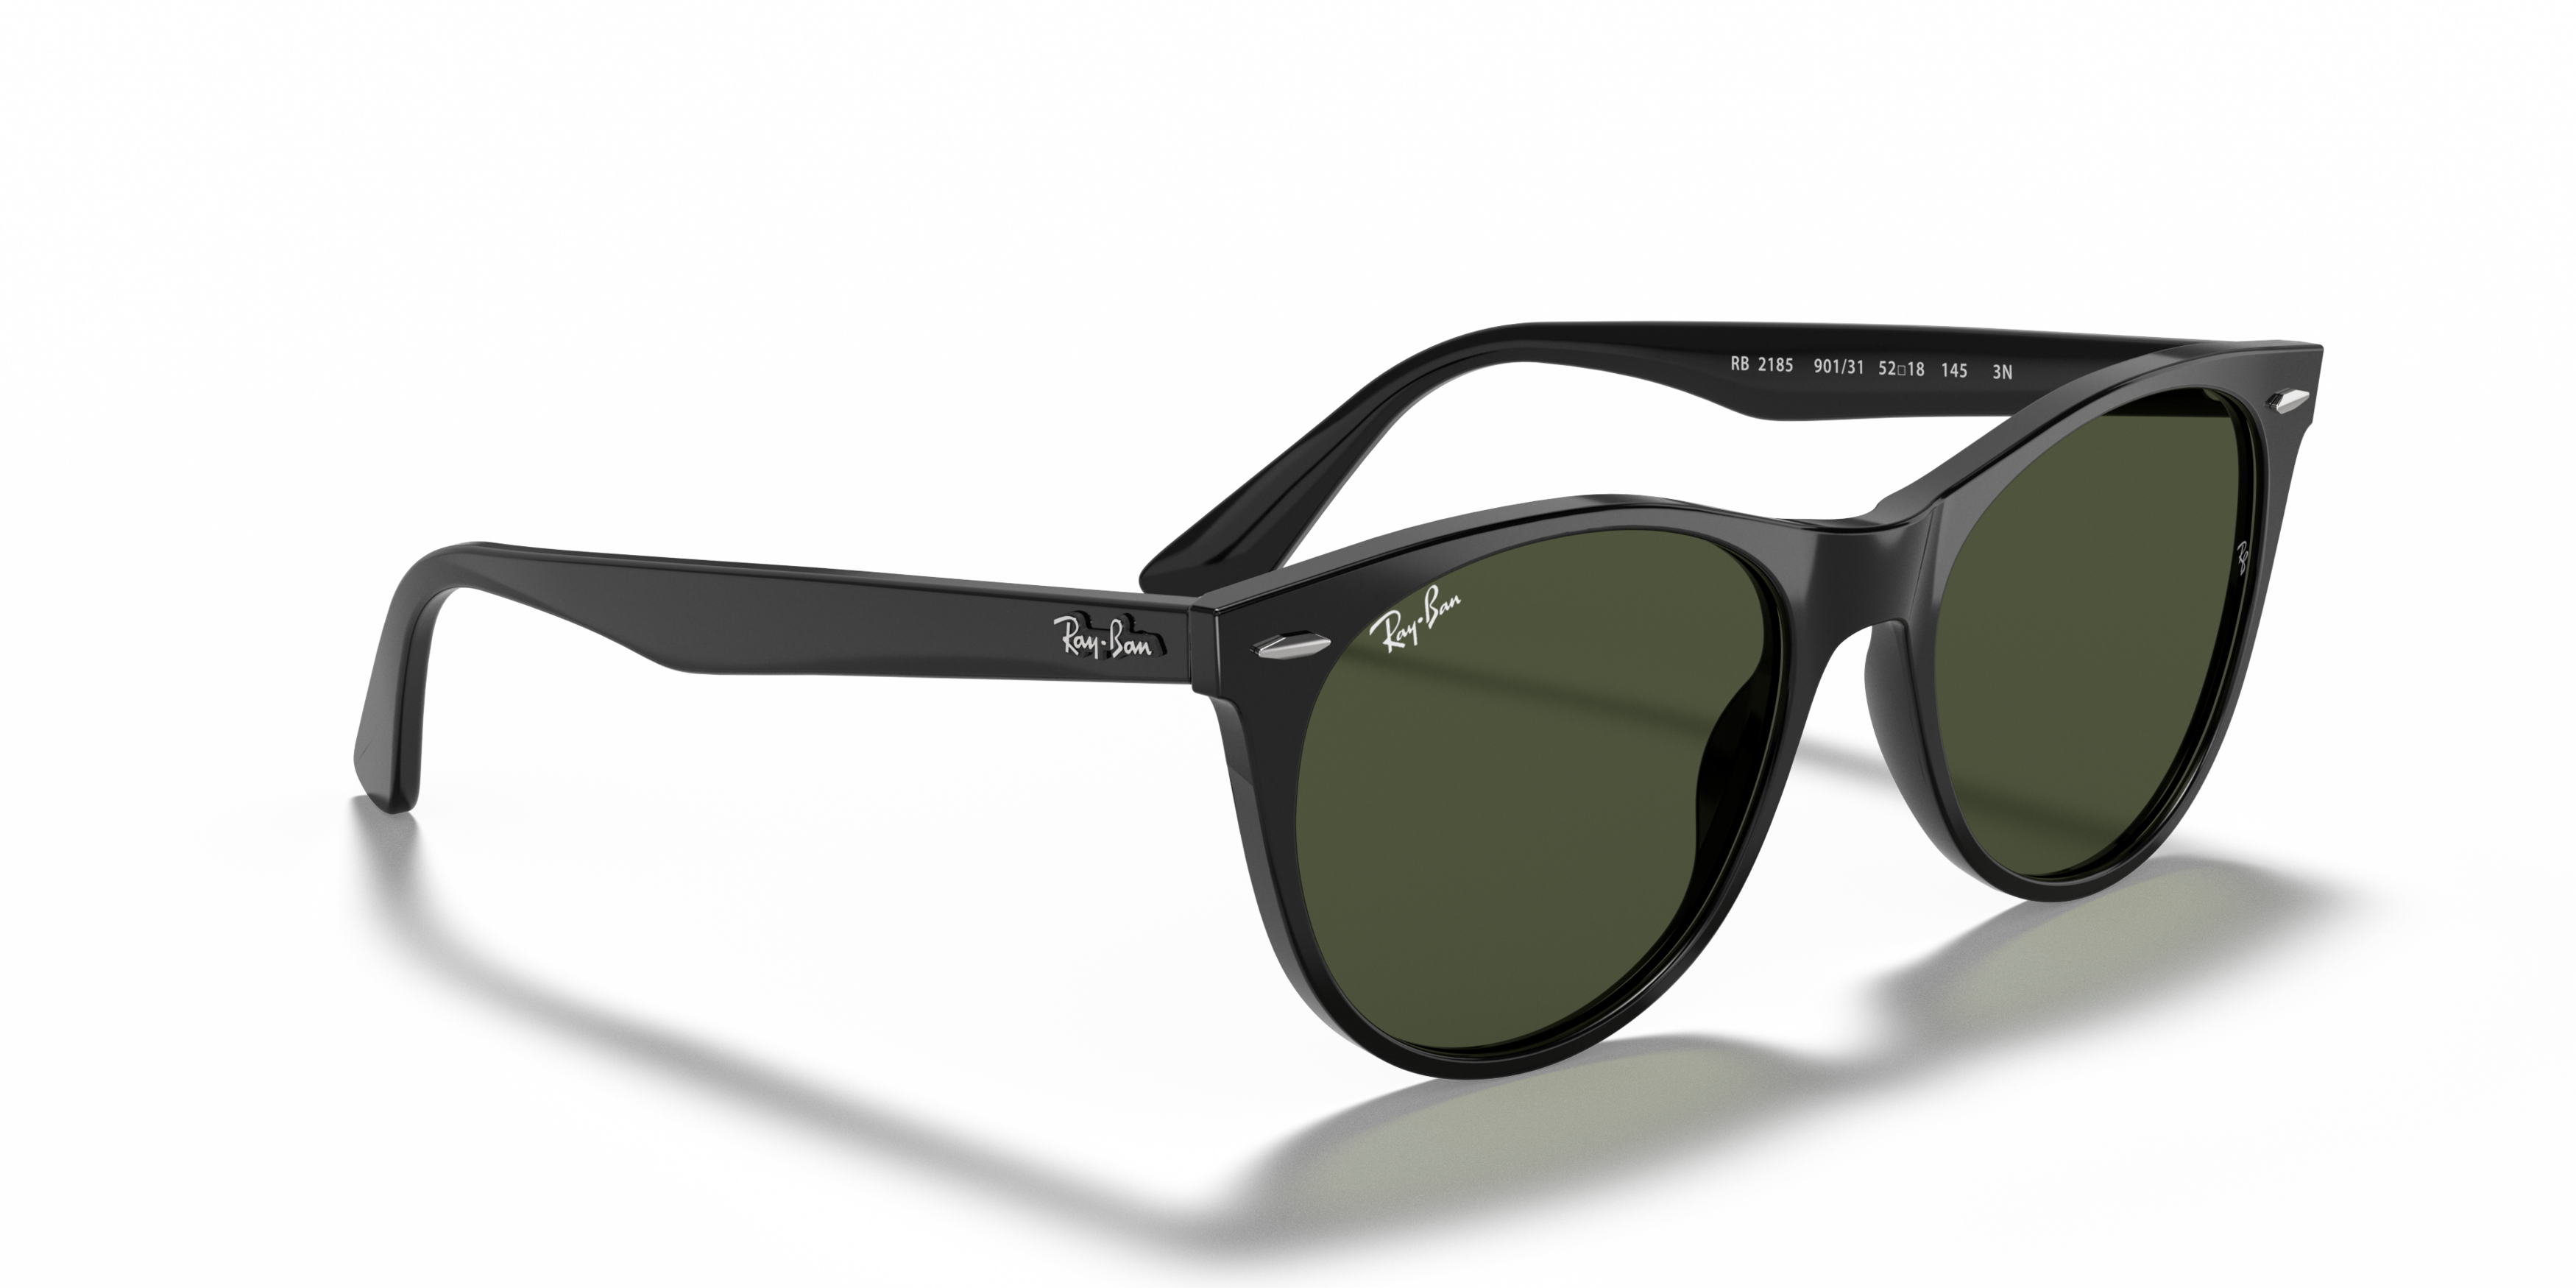 Angle_Right01 Ray-Ban Wayfarer II RB 2185 (901/58) Sunglasses Green / Black